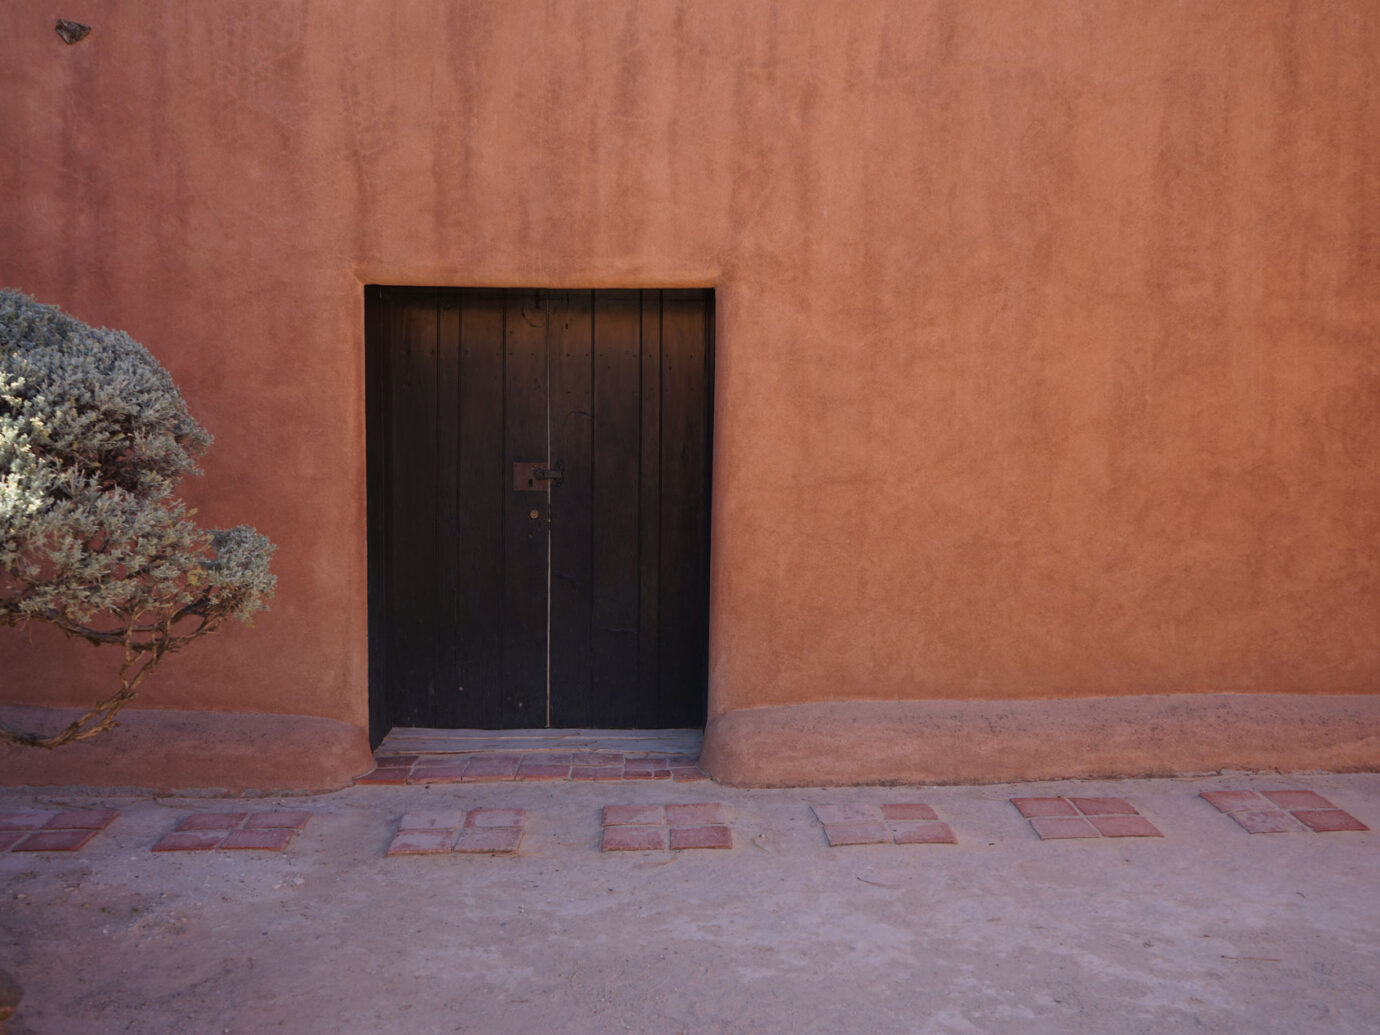 Georgia O'Keeffe's home in Abiquiu, New Mexico